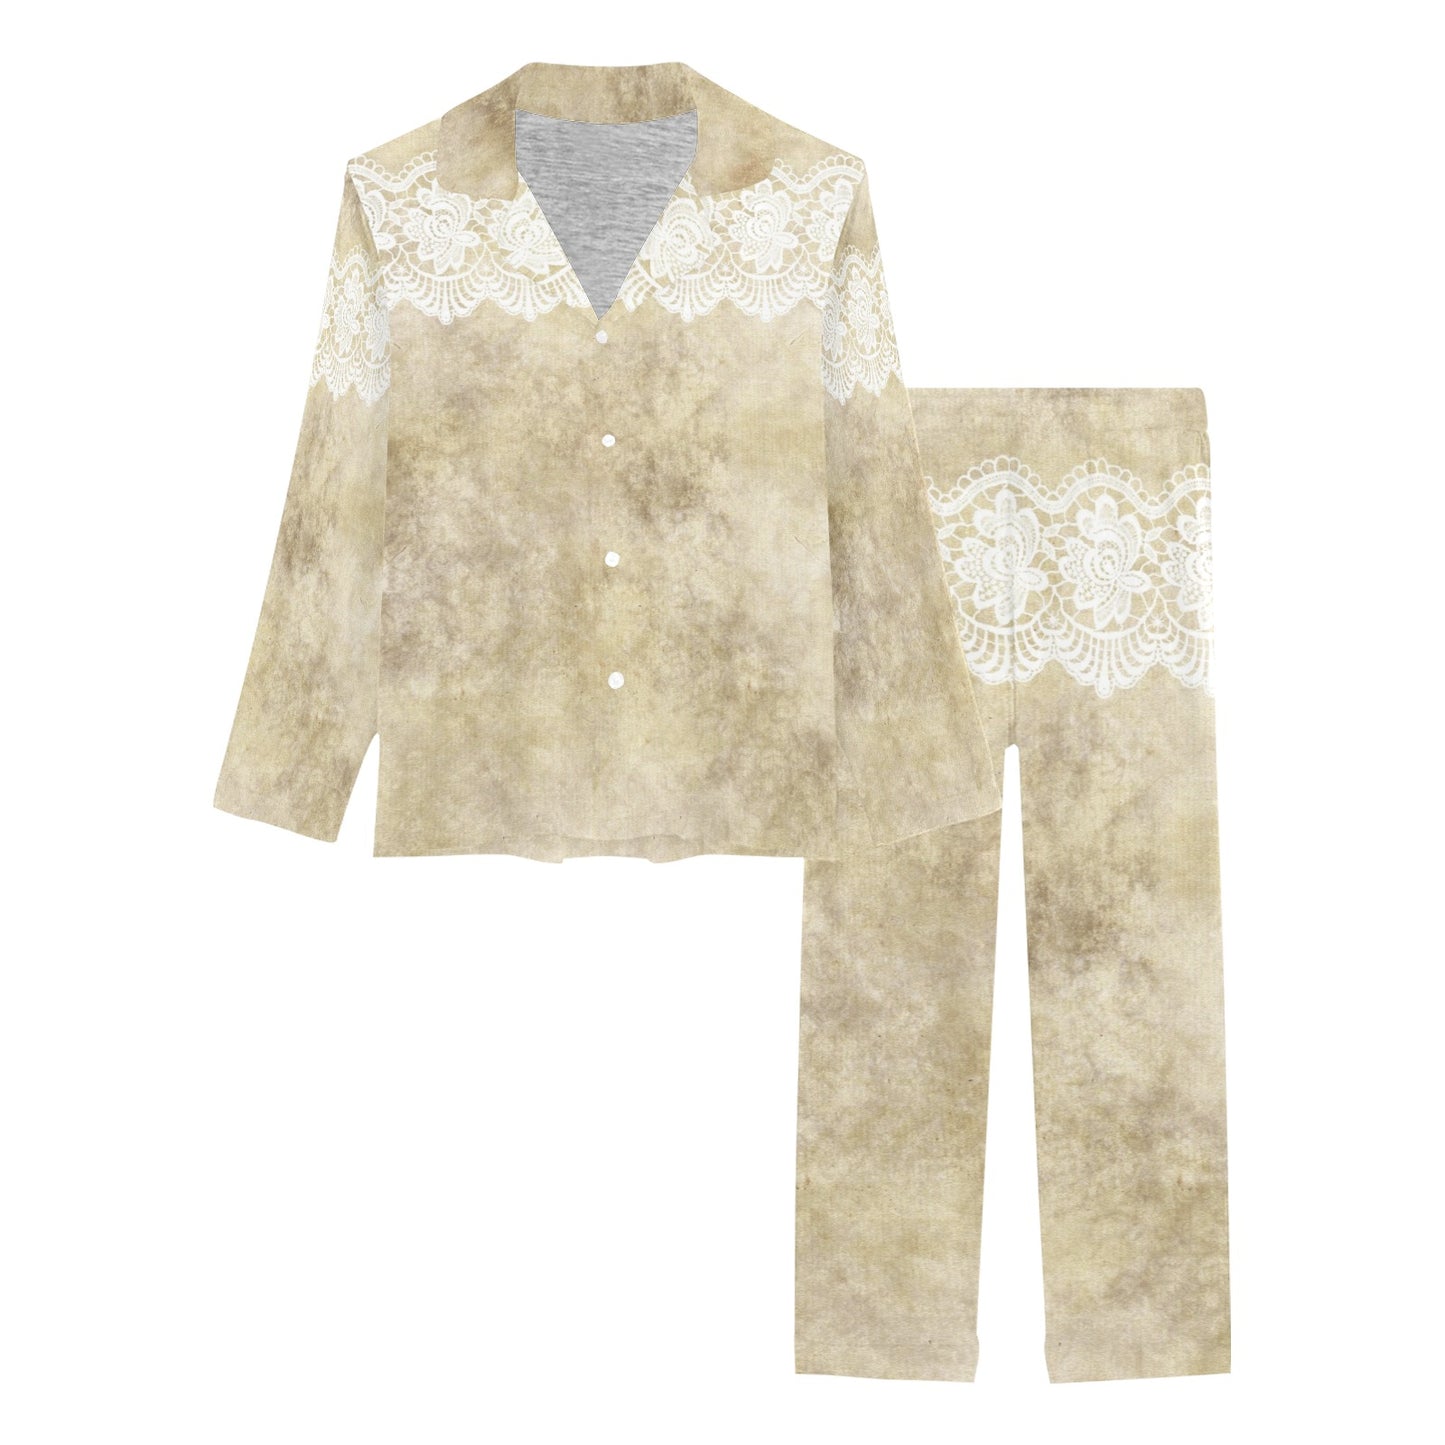 Victorian printed lace pajama set, design 28 Women's Long Pajama Set (Sets 02)